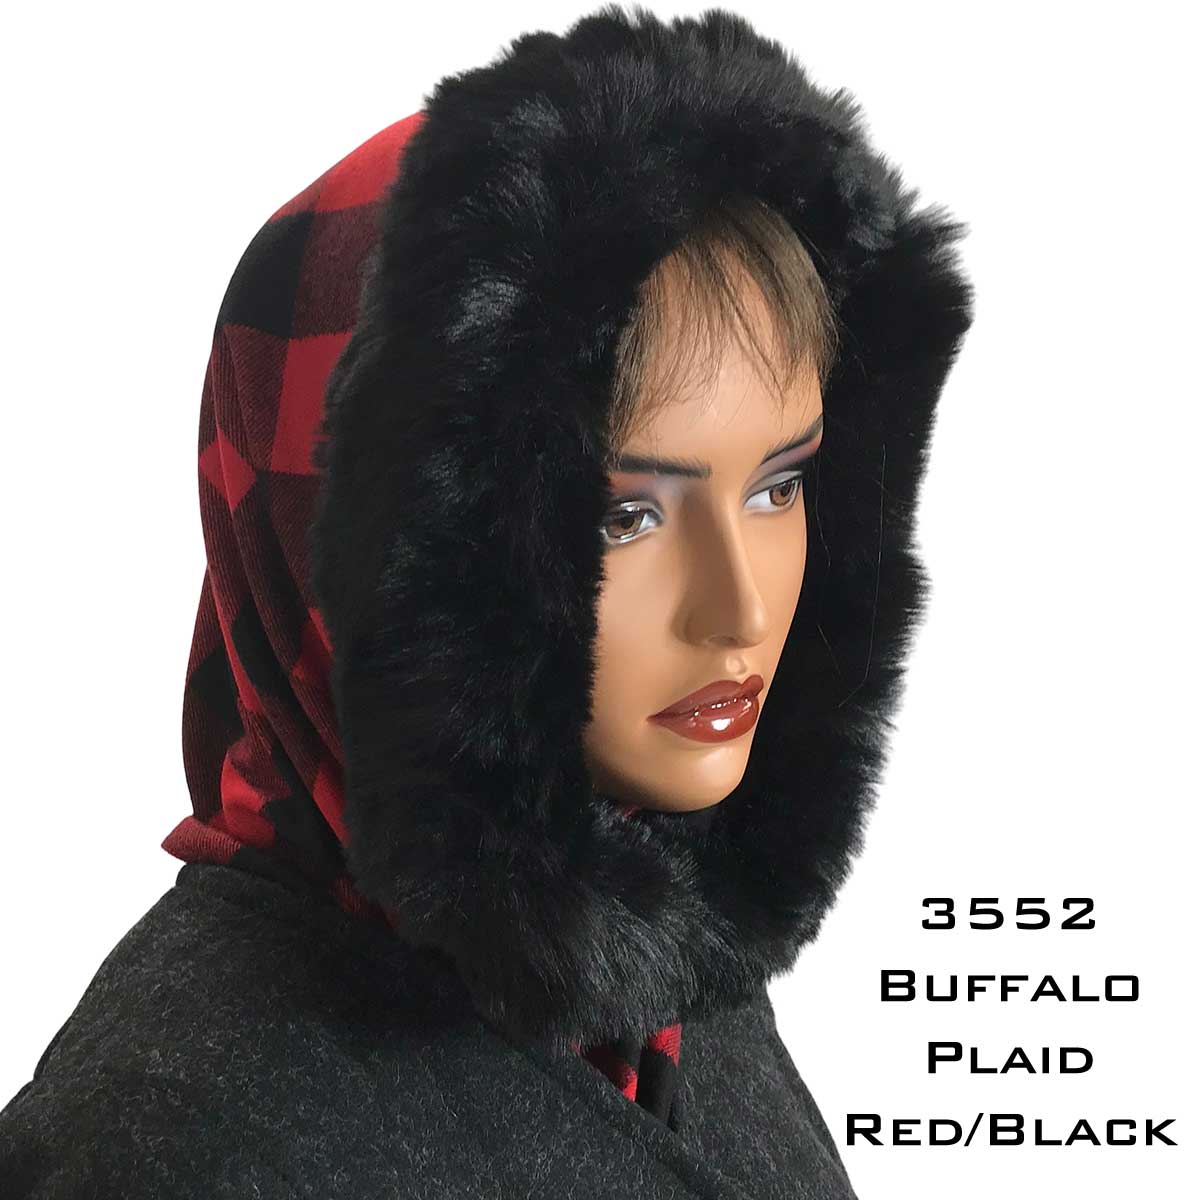 Buffalo Plaid Red/Black<br> 
Black Fur Trimmed Infinity